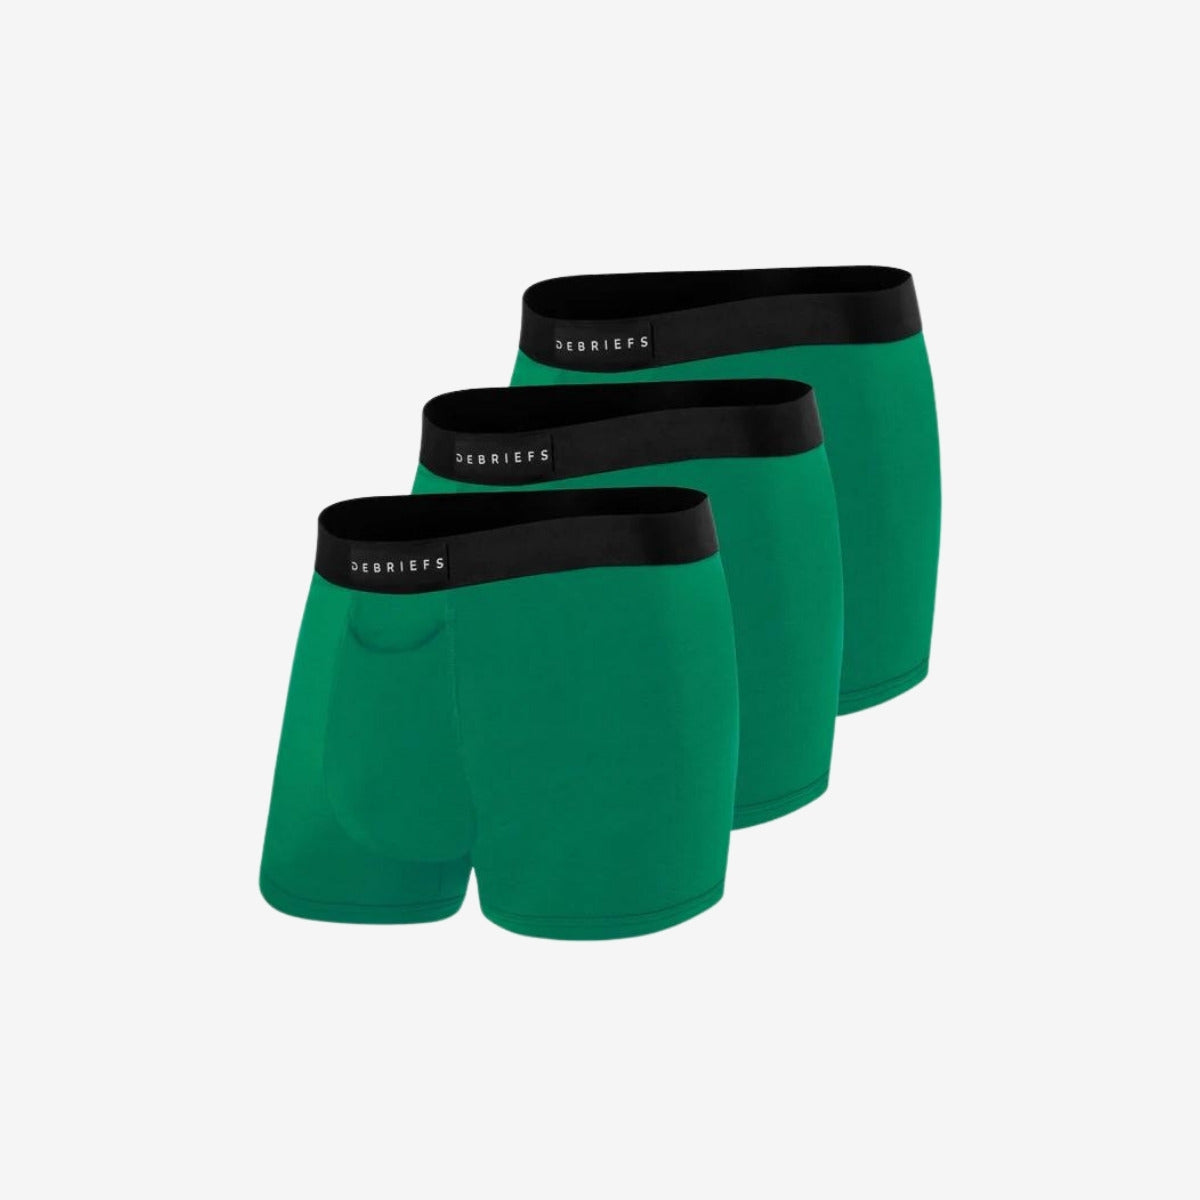 Mens Trunks Underwear Australia 3 Pack - All Forest Green